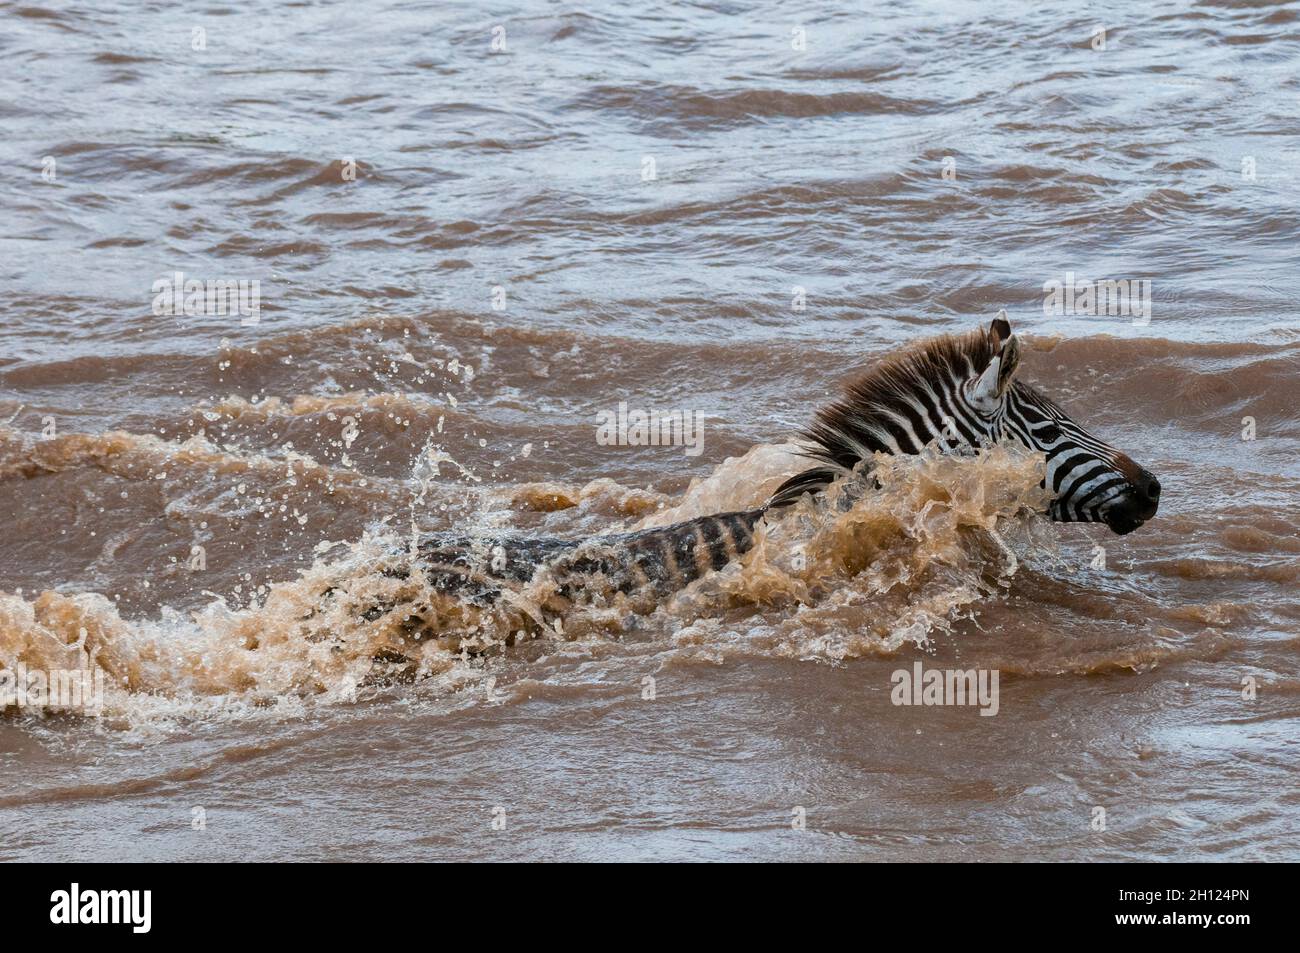 A plains zebra, Equus quagga, crossing the Mara River during migration. Mara River, Masai Mara National Reserve, Kenya. Stock Photo